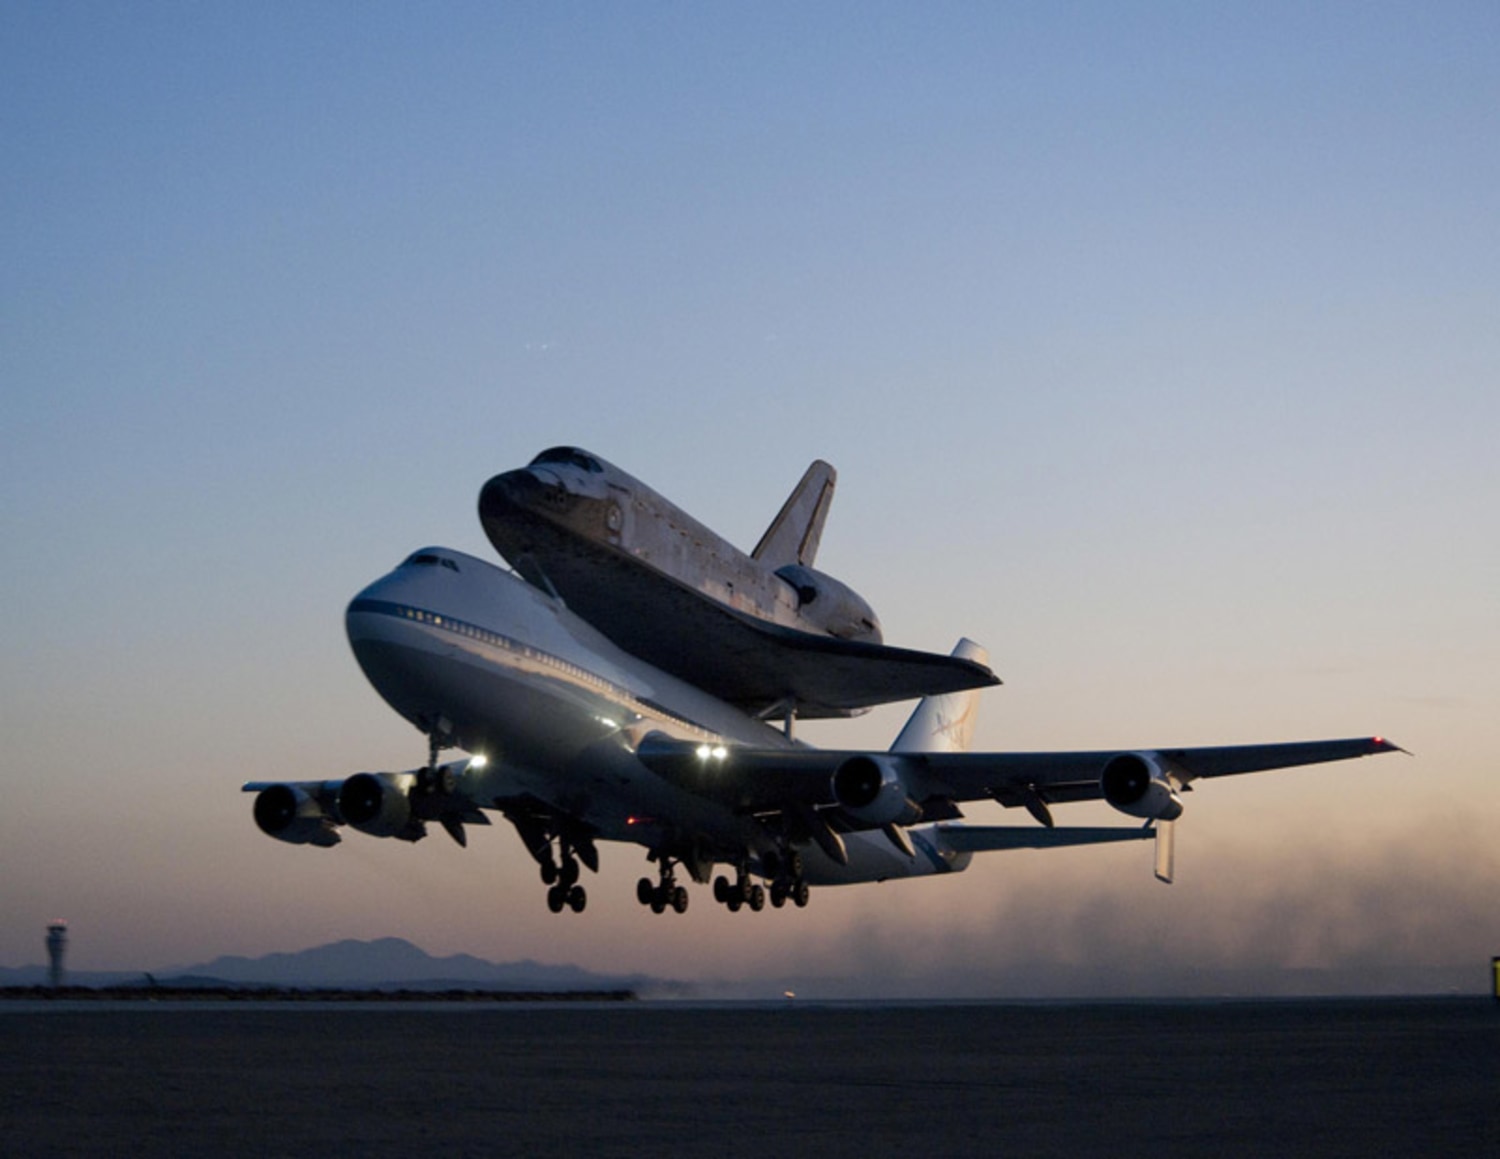 NASA's shuttle-carrying jumbo jet makes its last flight